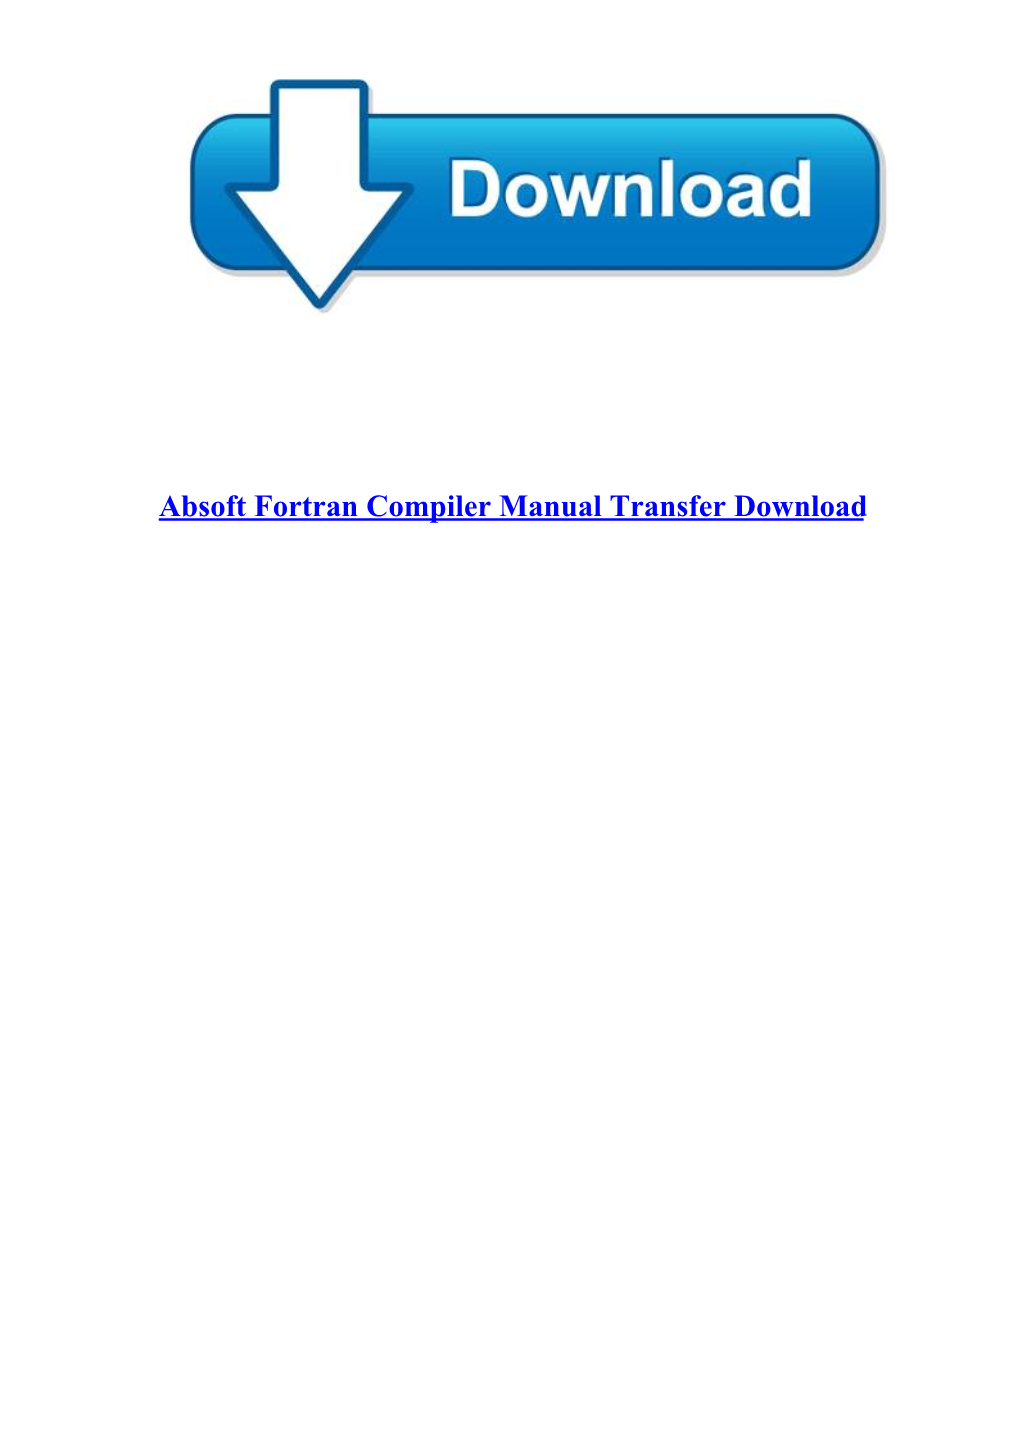 [List-Ebook Pdf] Absoft Fortran Compiler Manual Transfer